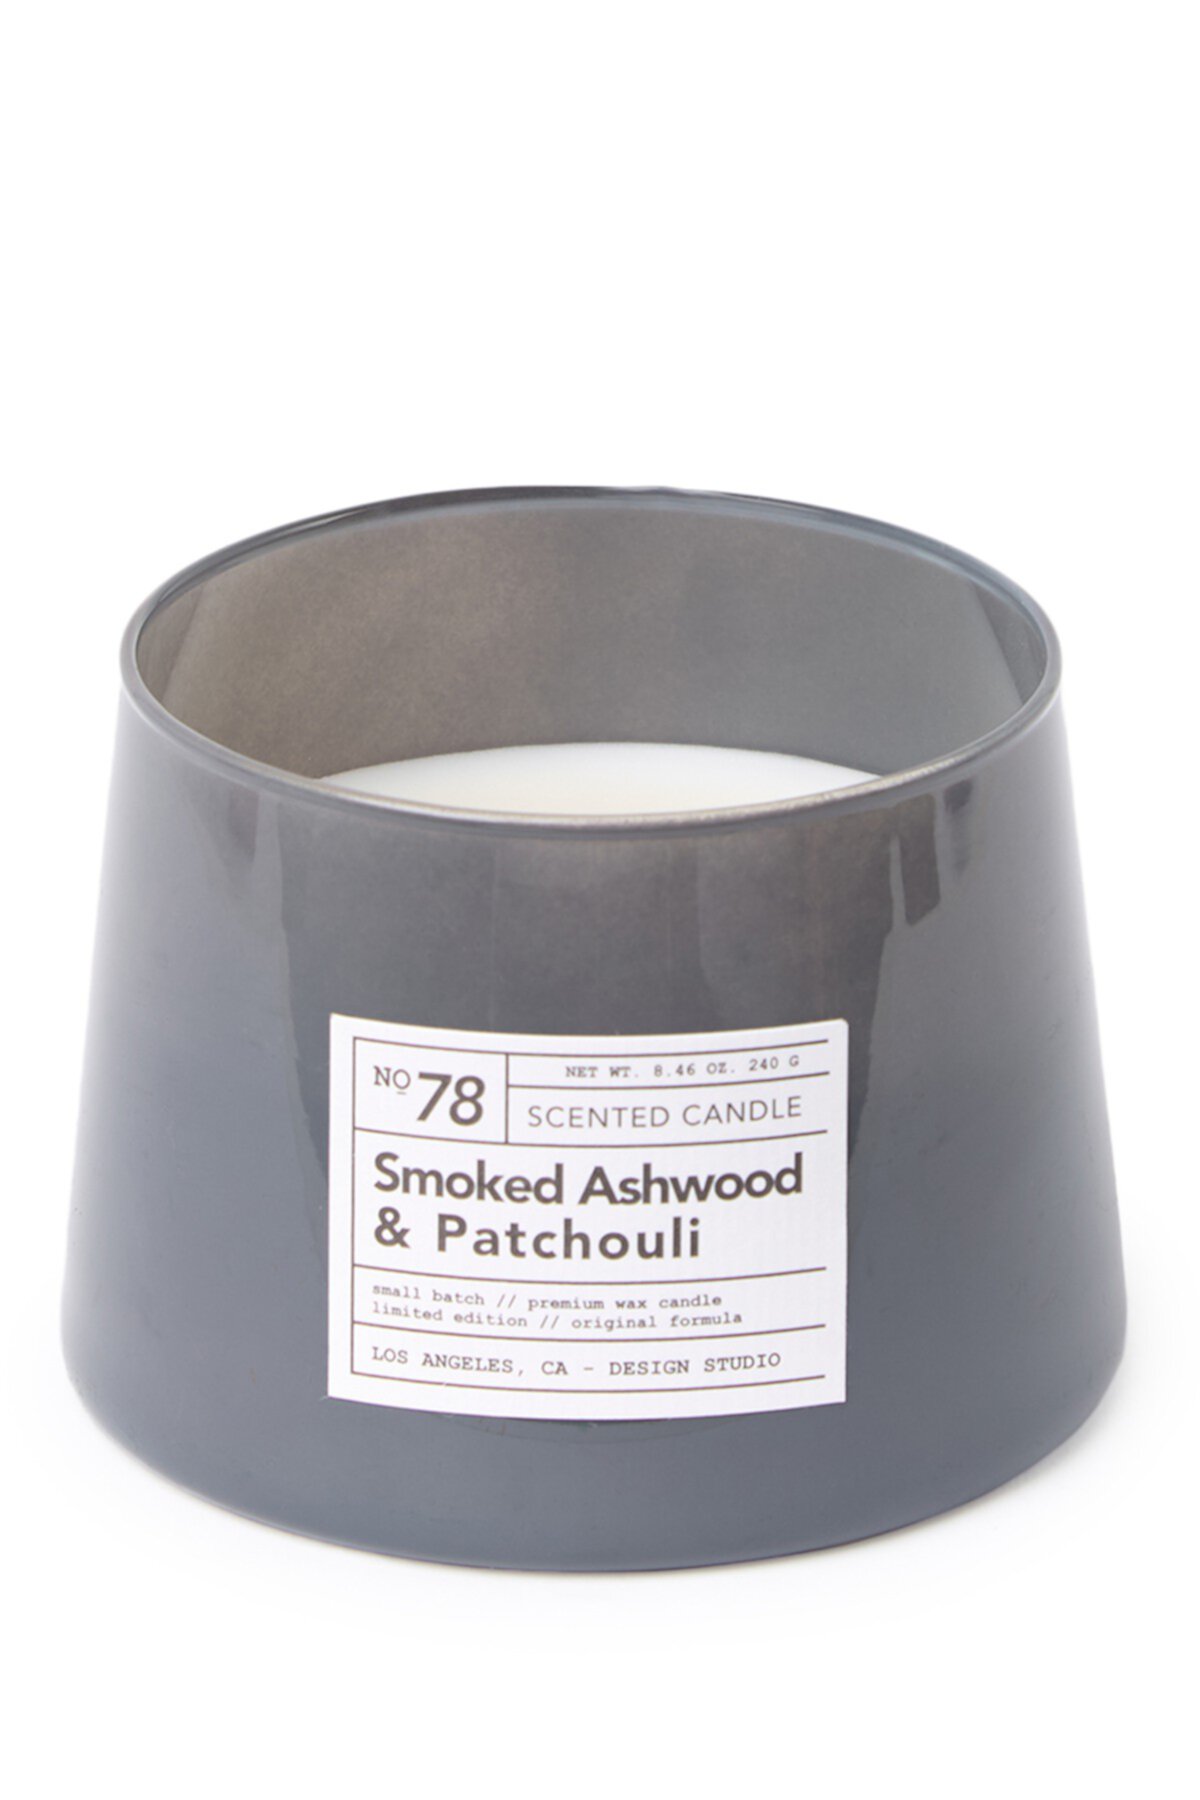 Smoked Ashwood & Patchouli Scented Candle - 8.46 oz. PORTOFINO